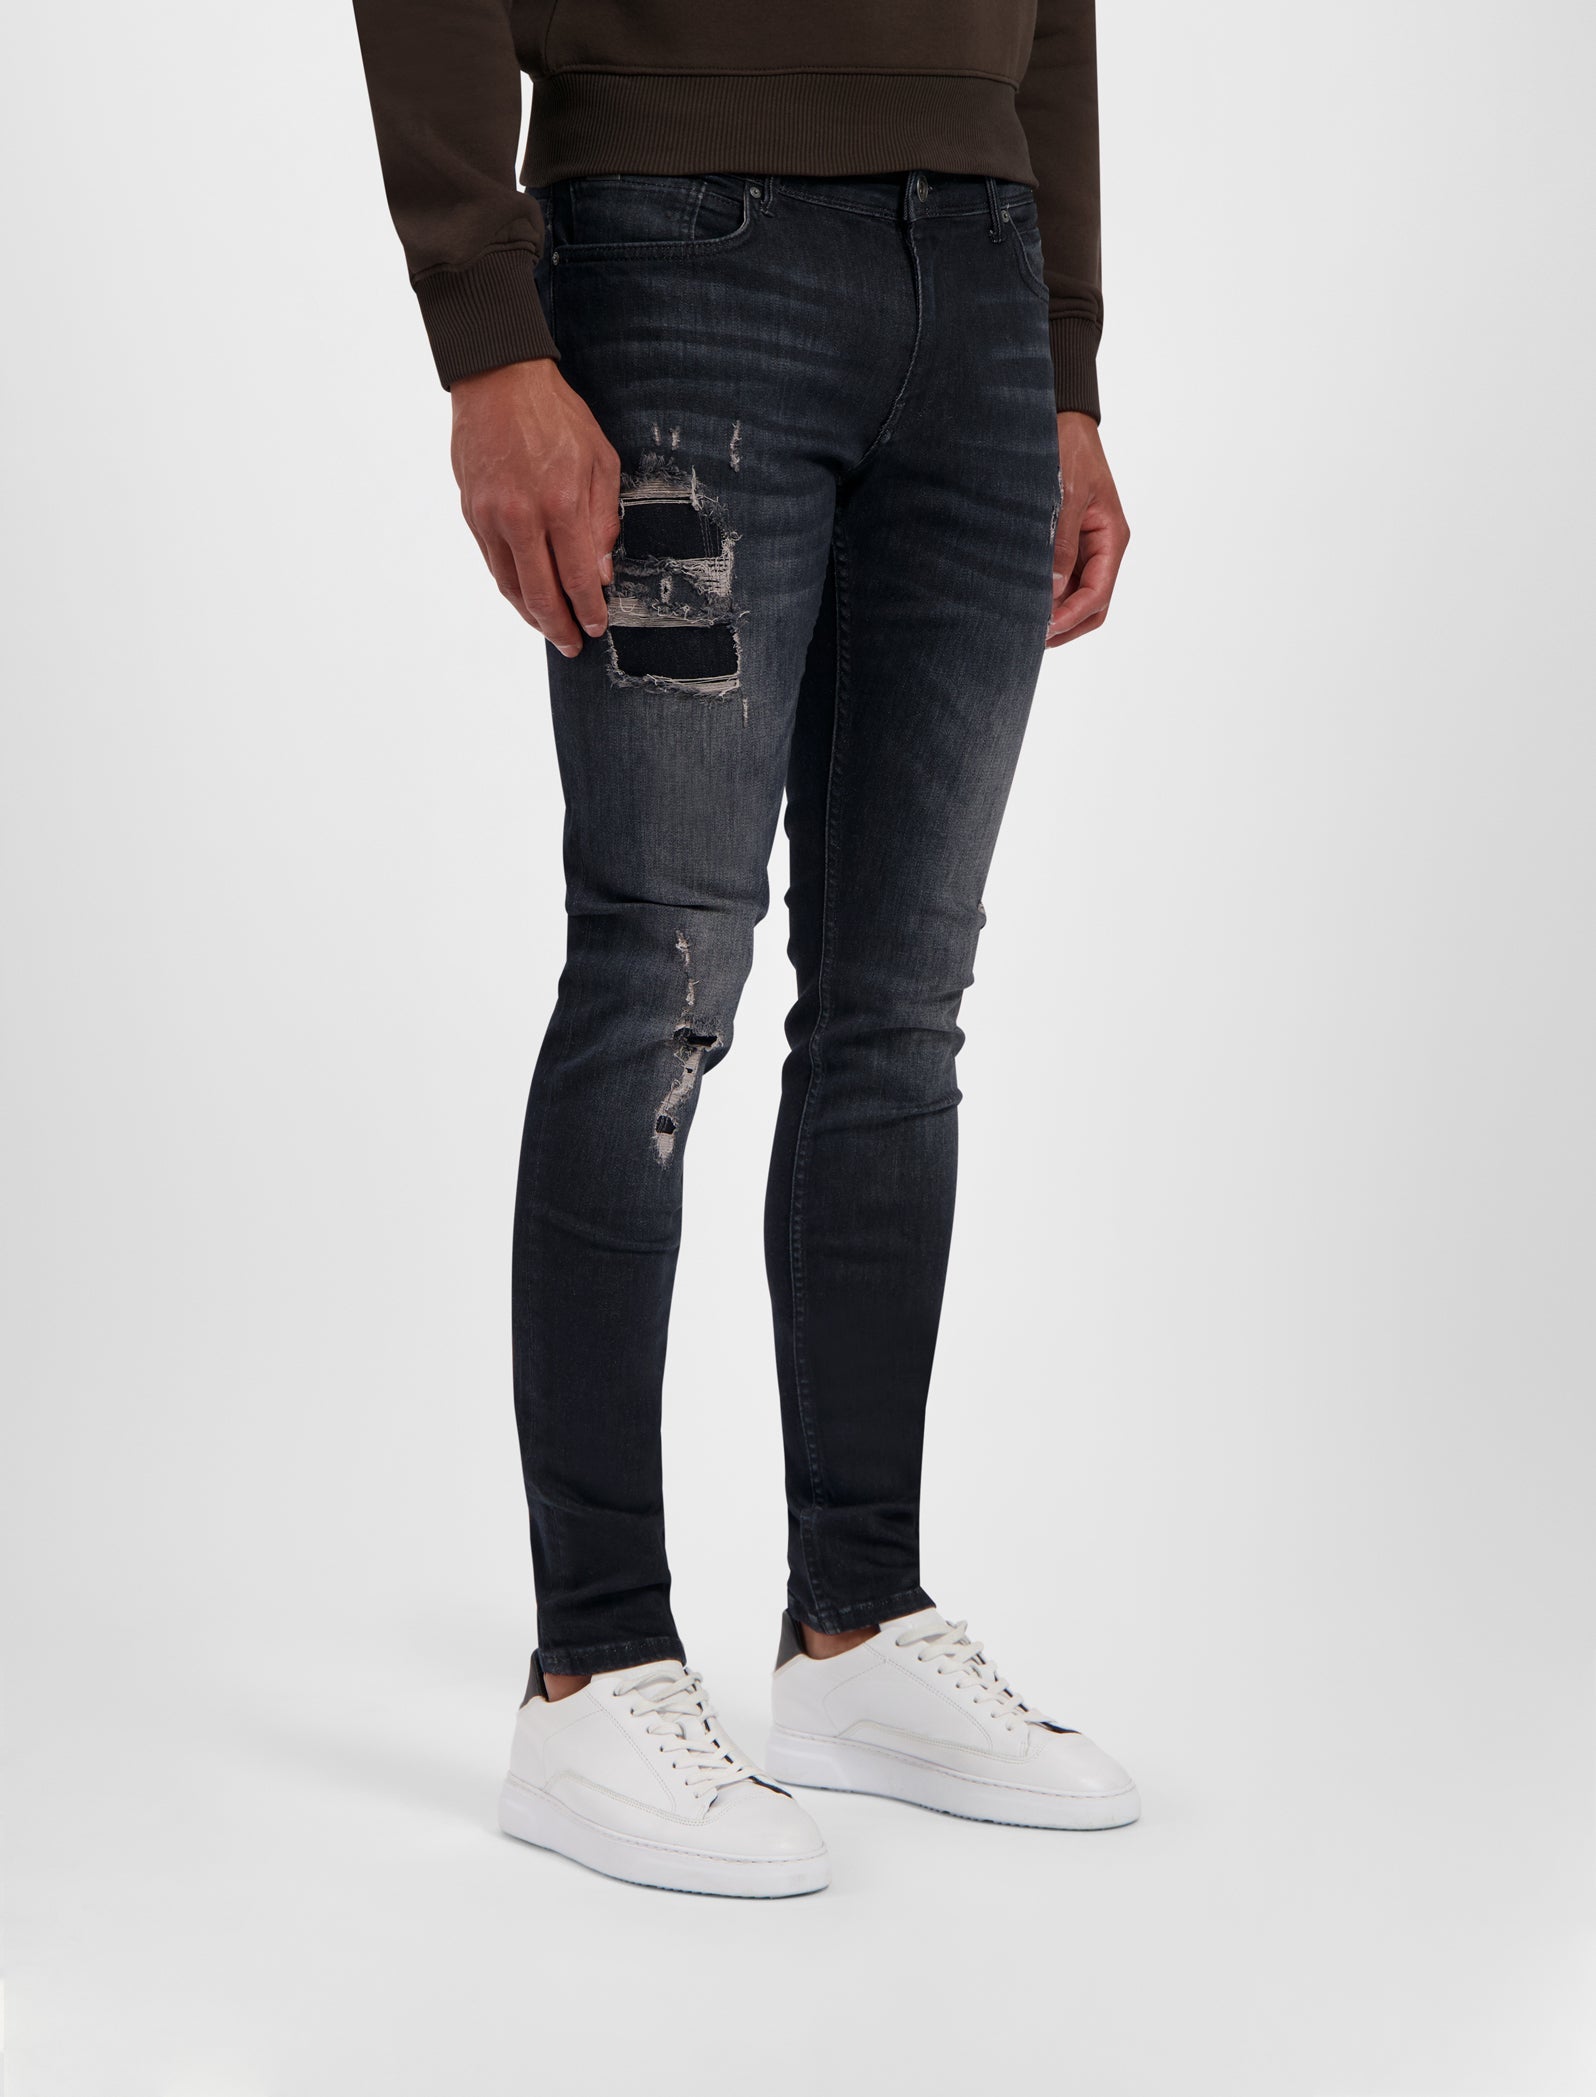 Purewhite Jeans The Jone W1111